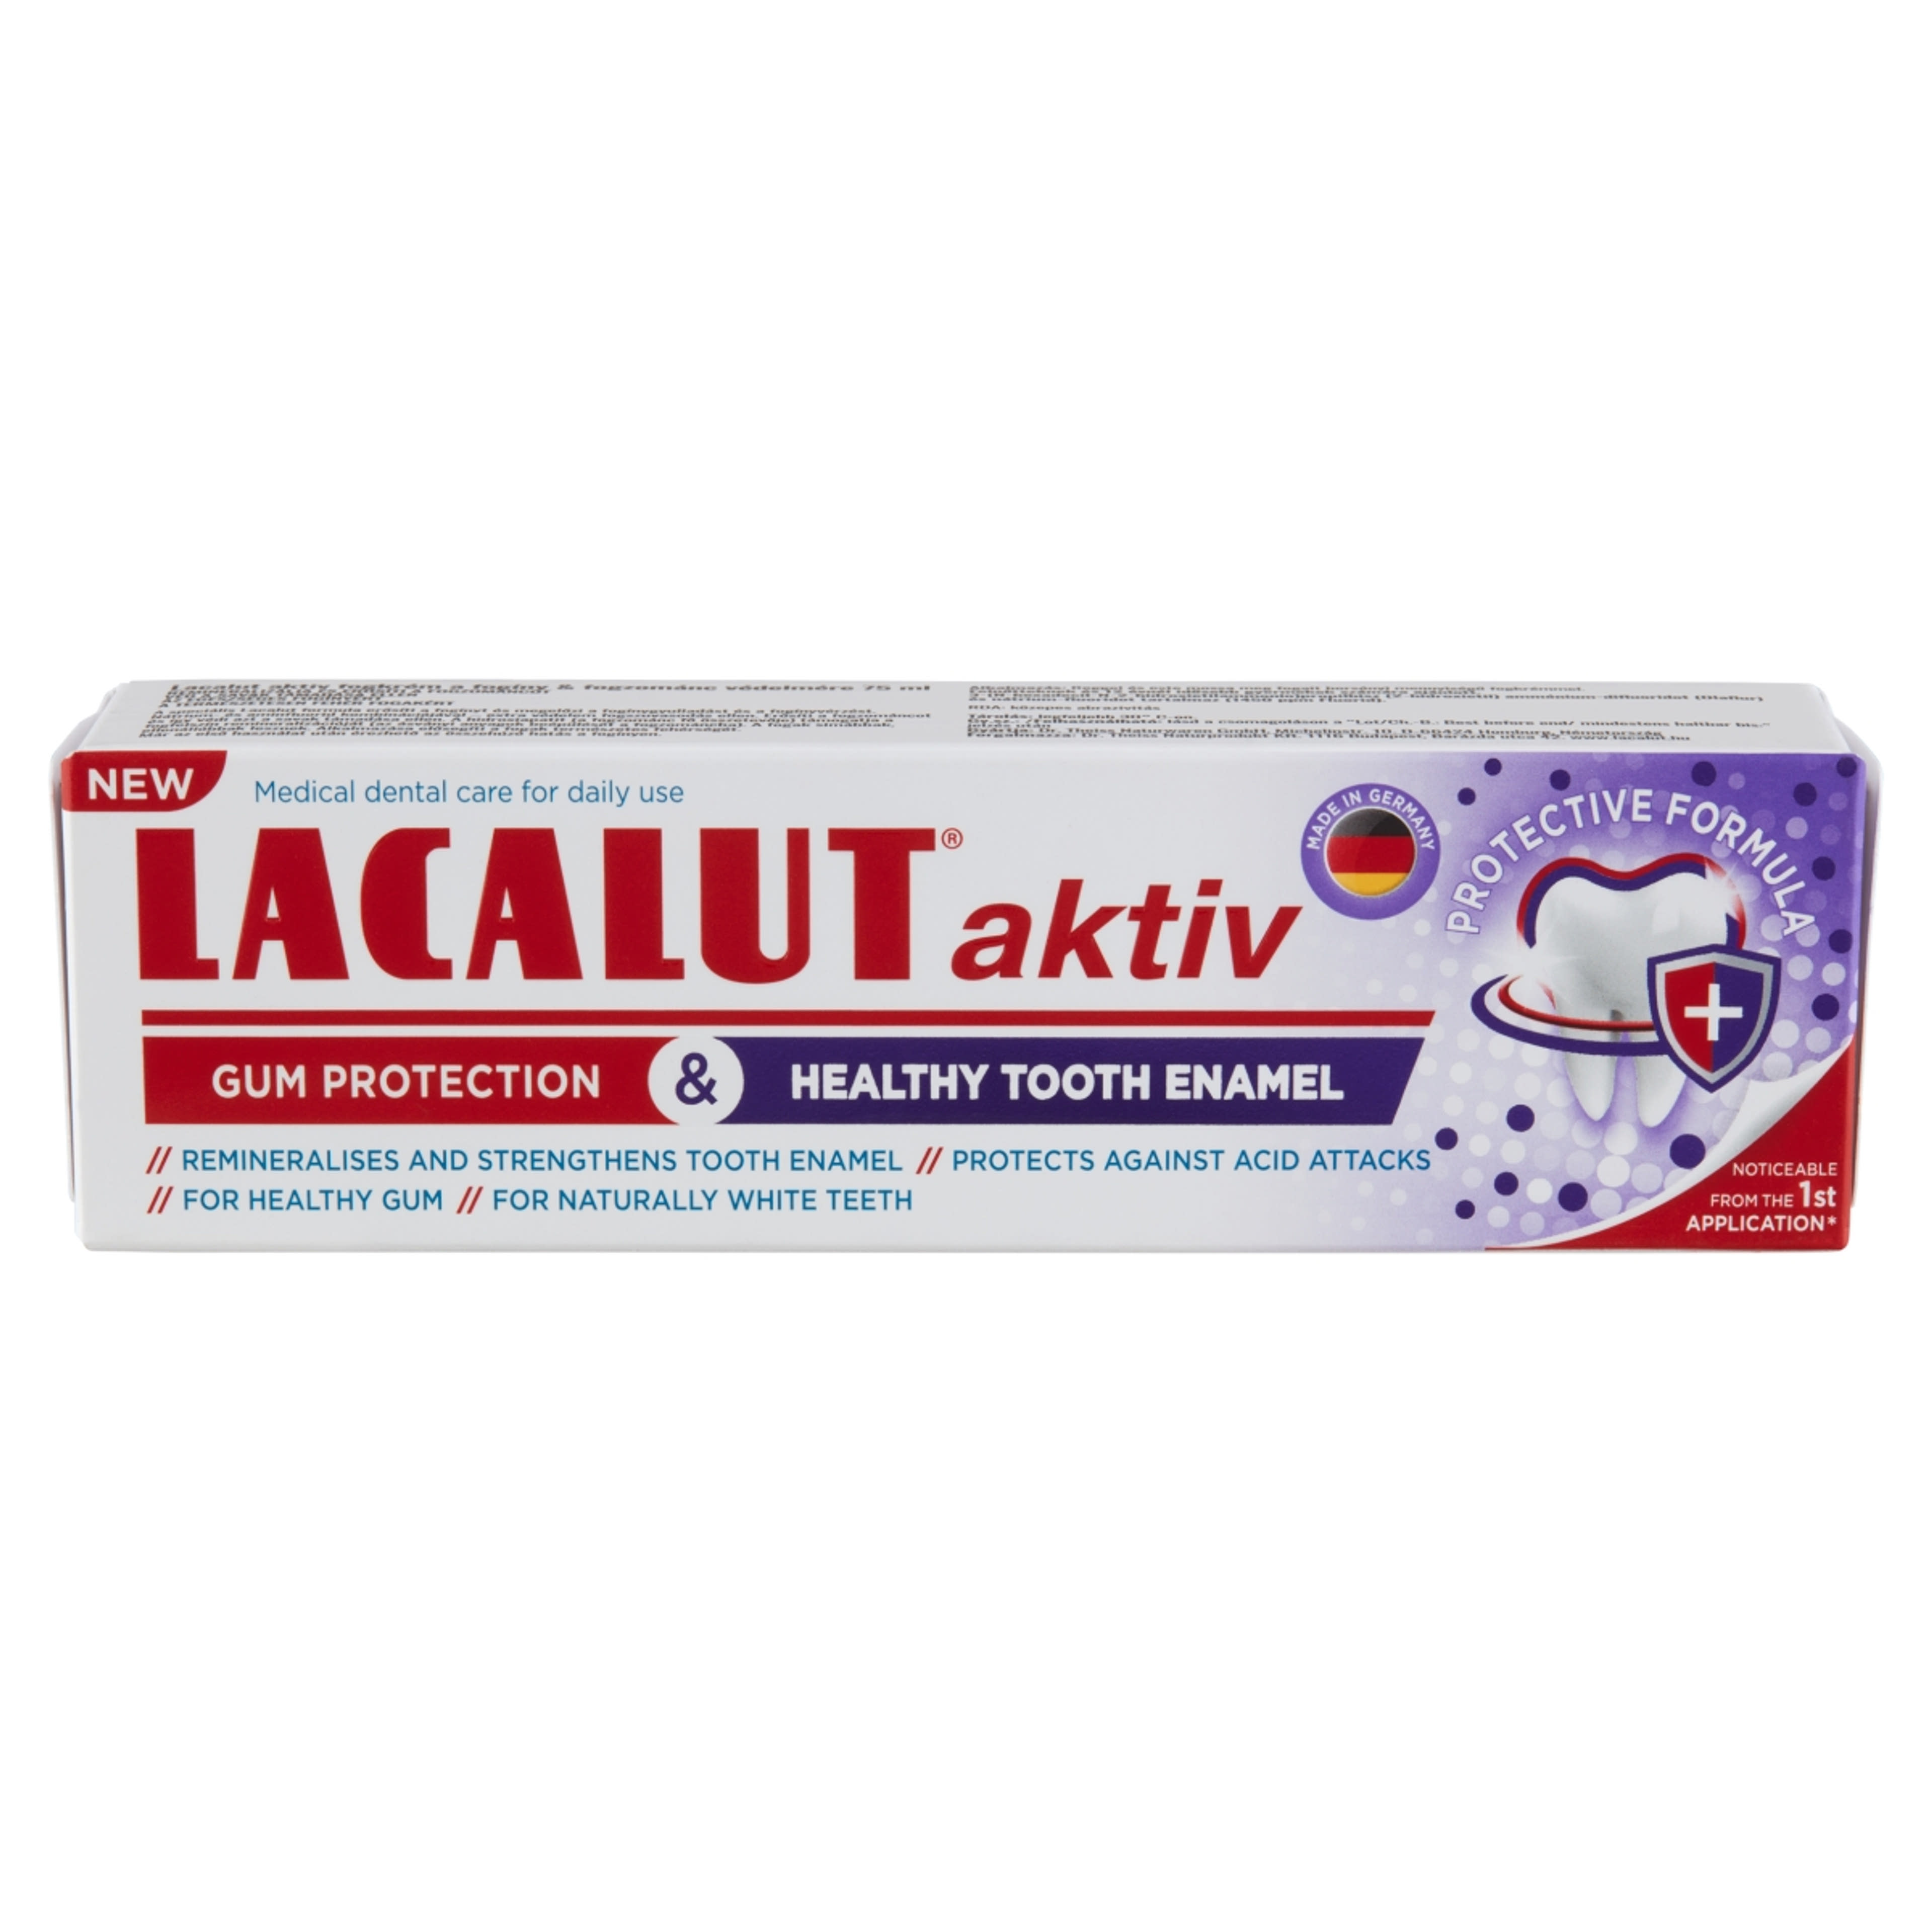 Lacalut Aktív Gum Protection&Healthy Tooth Enamel fogkrém - 75 ml-2